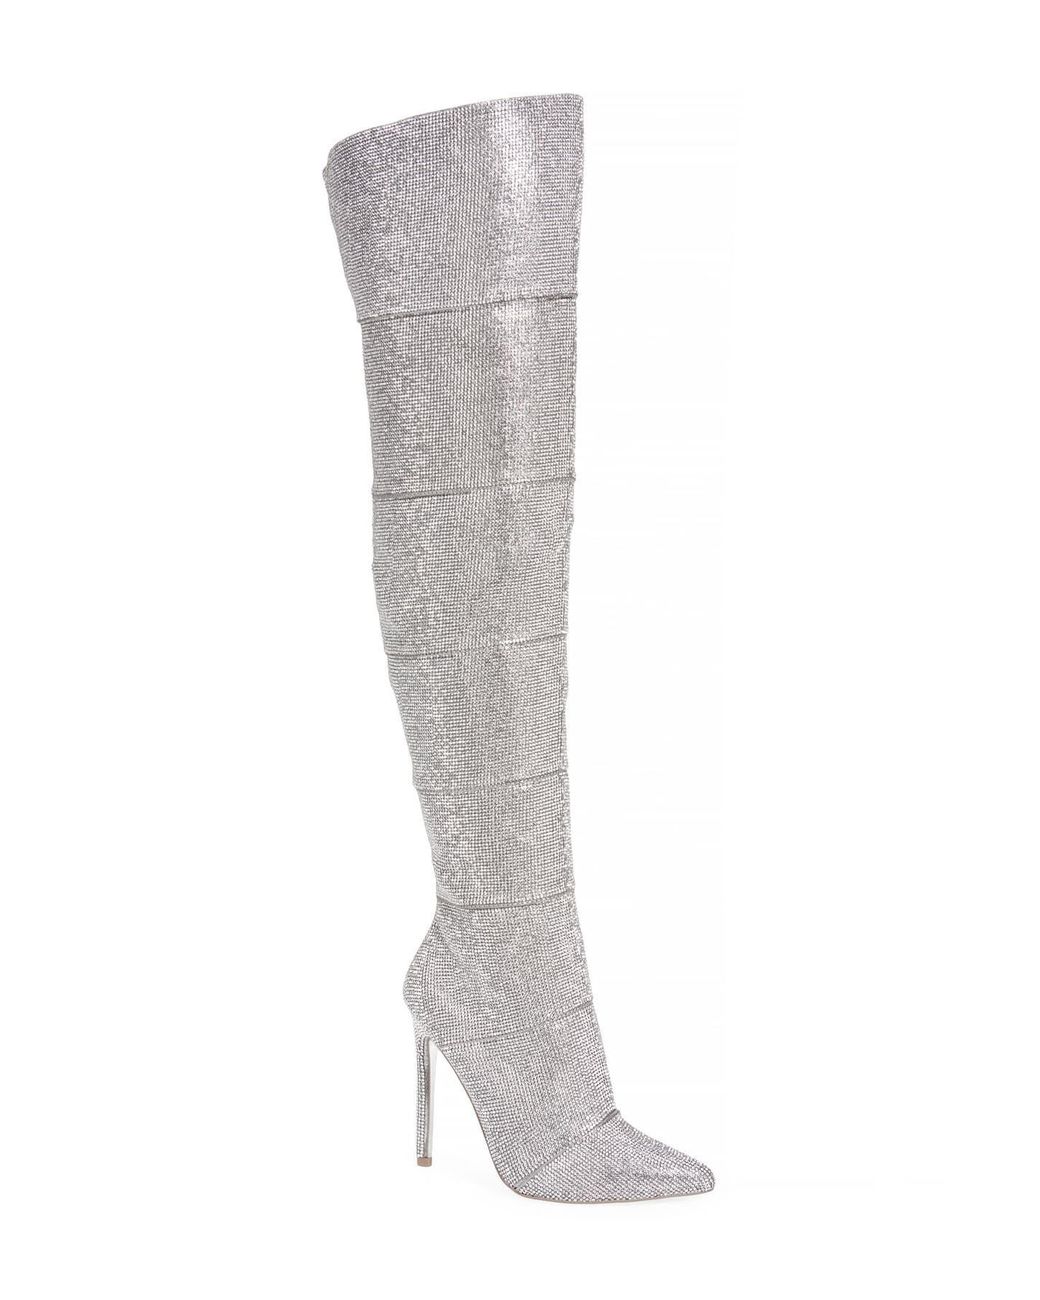 Steve Madden Wonder Crystal Embellished Over The Knee Boot in Gray | Lyst